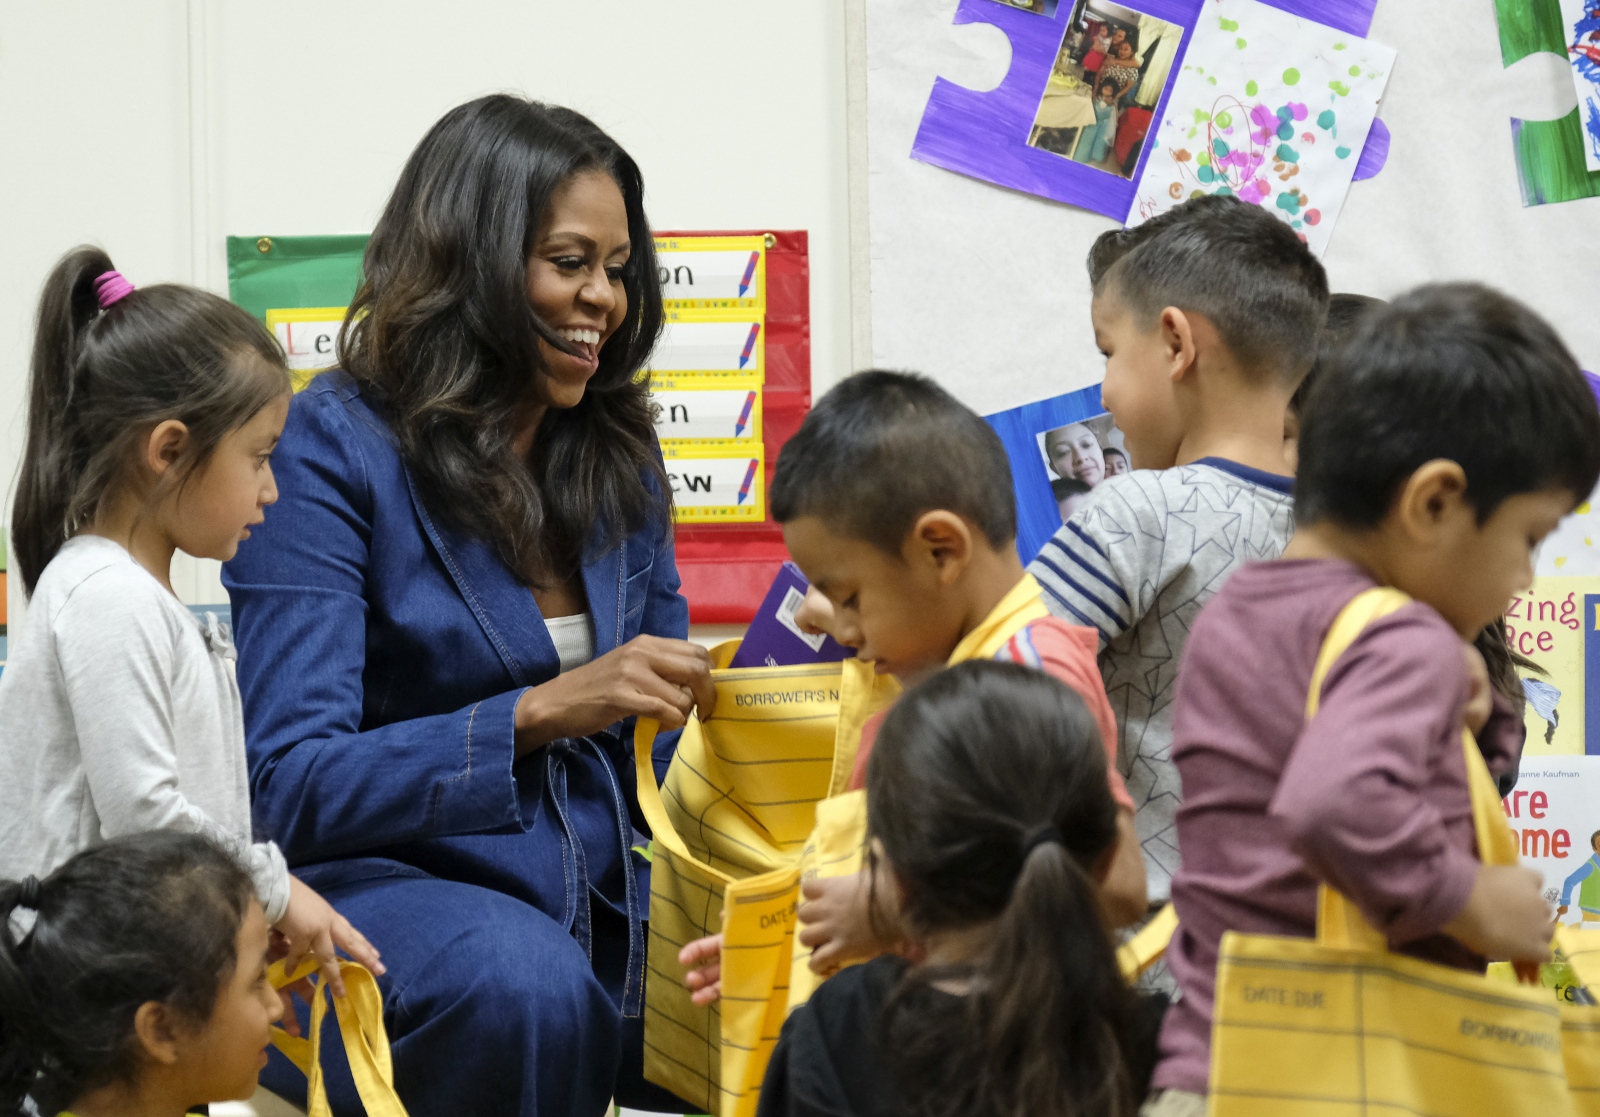 Michelle Obama Vists Student at Skid Row School